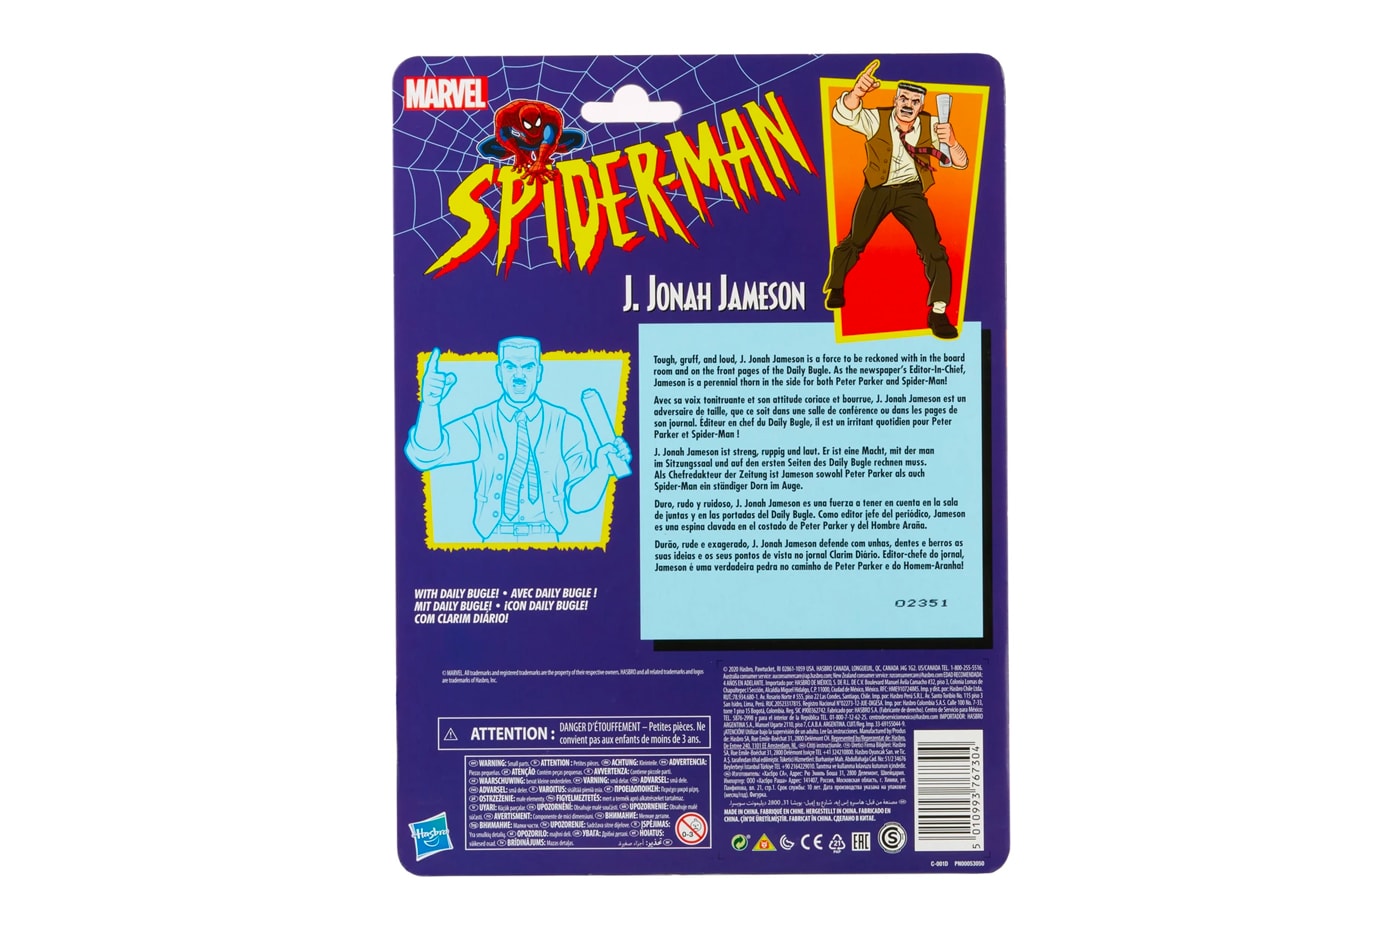 Человек-паук Дж. Джона Джеймсон Hasbro Marvel Legends Series Release игрушки фигурка Triple-J Marvel дизайн фильмы Mysterio Daily Bugle